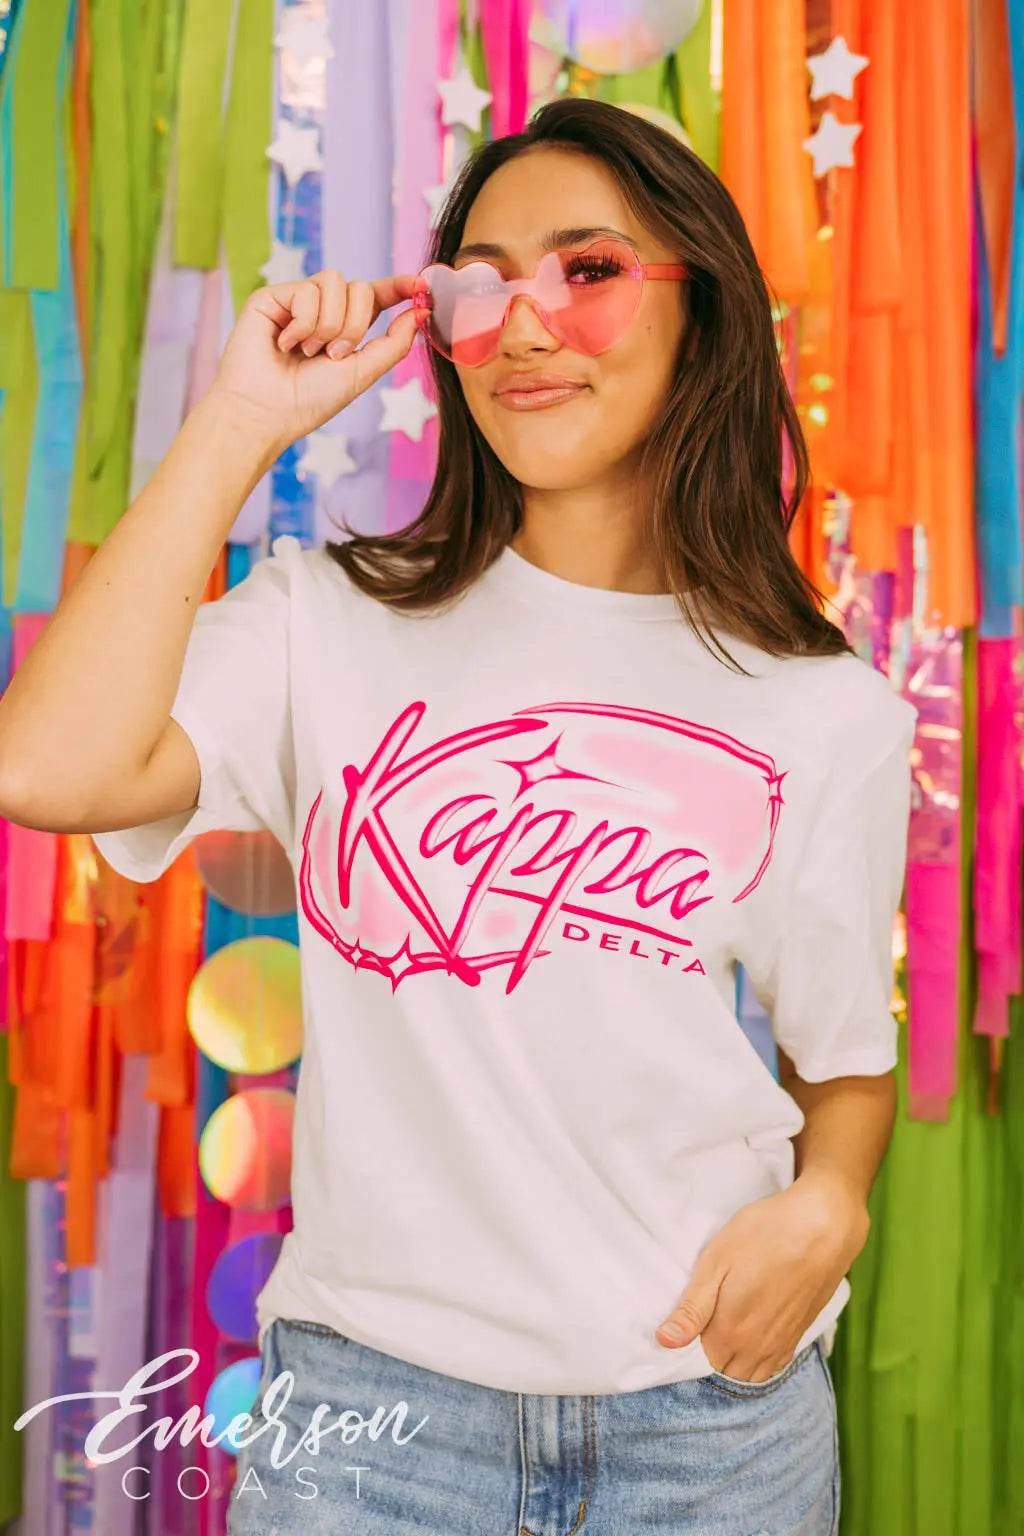 Kappa Delta Sparkle Airbrush Tshirt